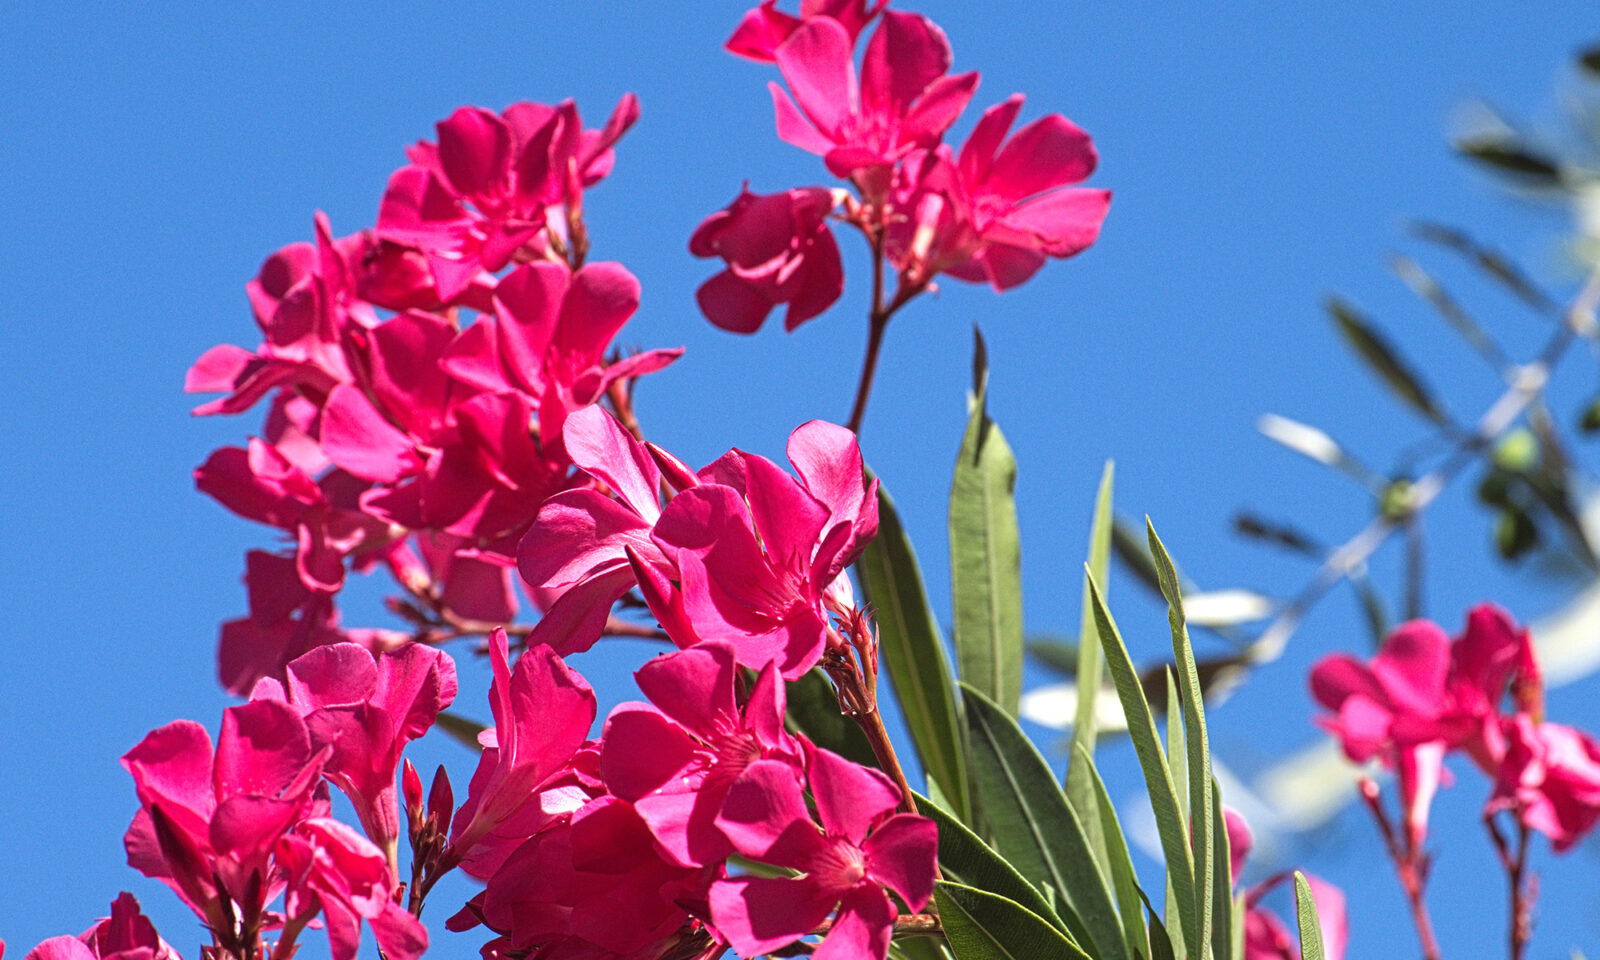 je li oleander otrovan?